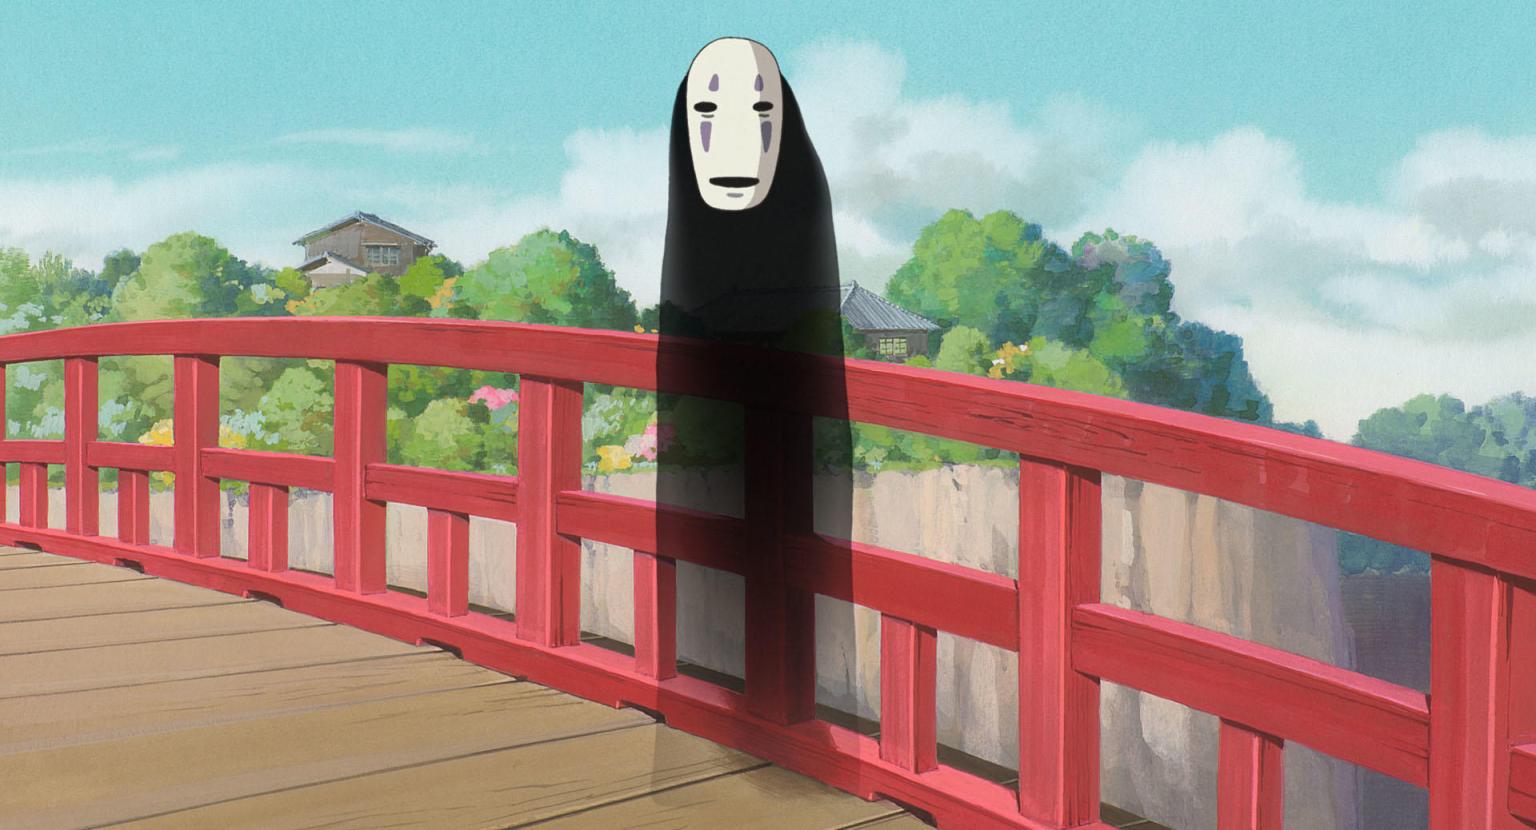 Studio Ghibli anime artist to sell artwork to support Ukraine - Japan Today